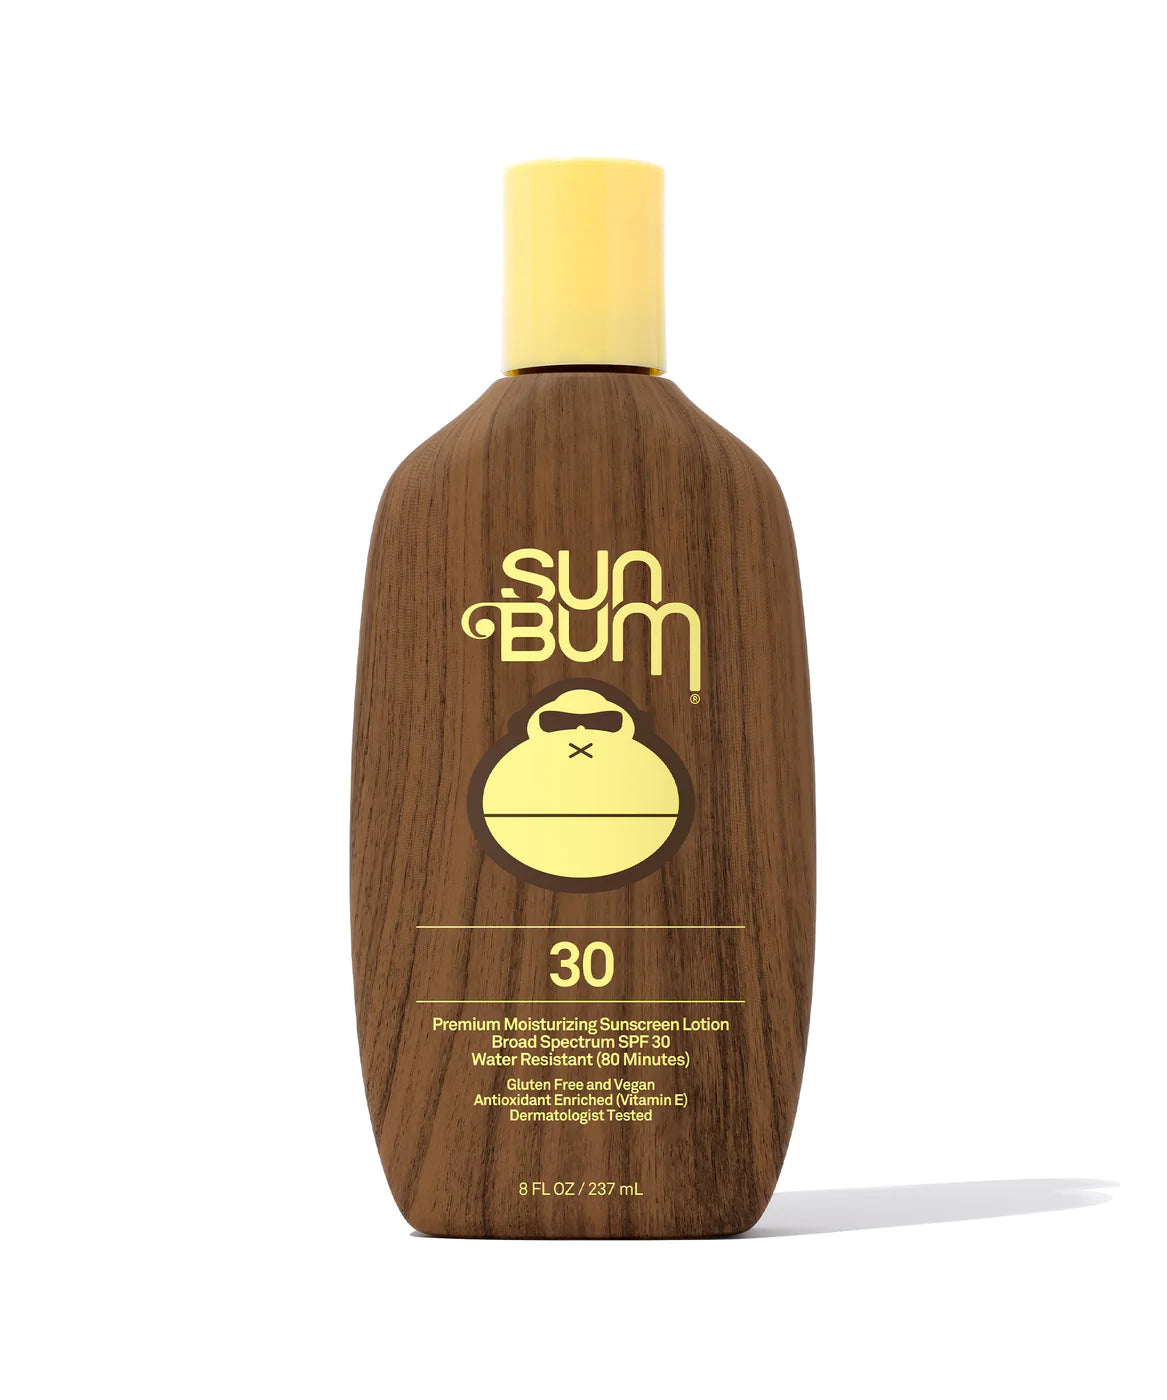 Sun Bum Original SPF 30 Sunscreen Lotion 8oz